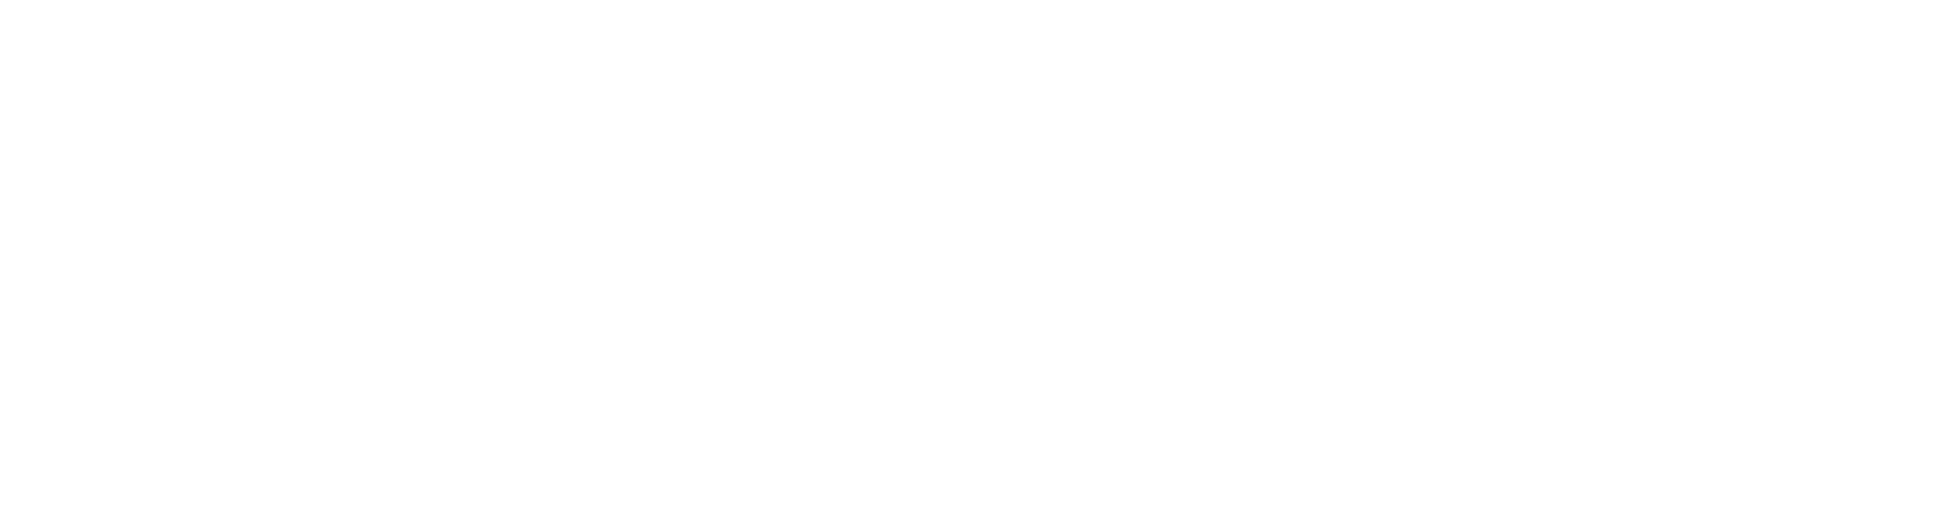 21CARS Logo Footer weiss